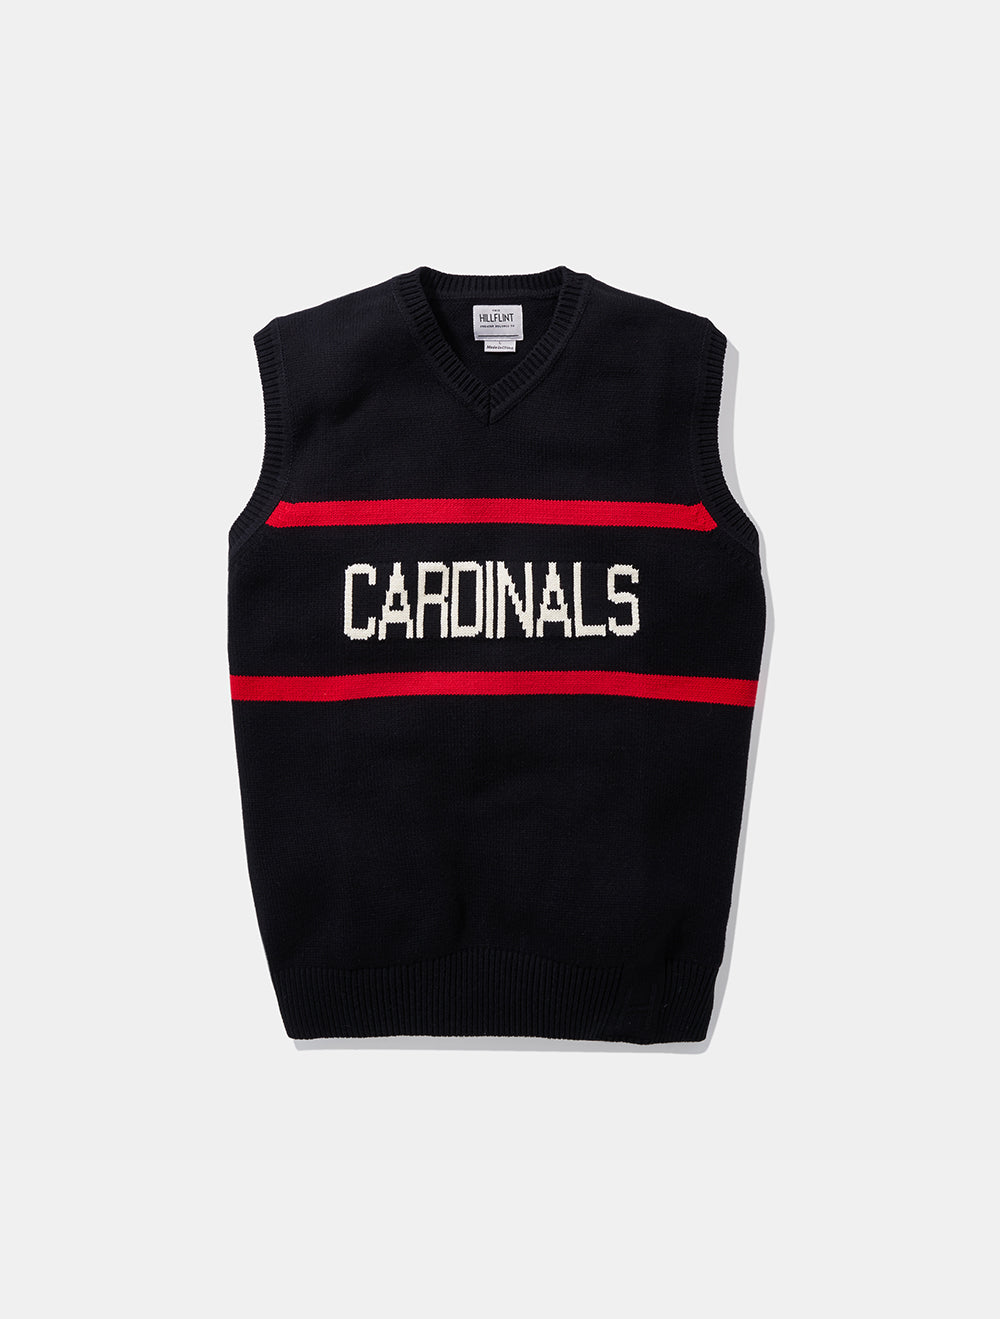 louisville cardinals vest